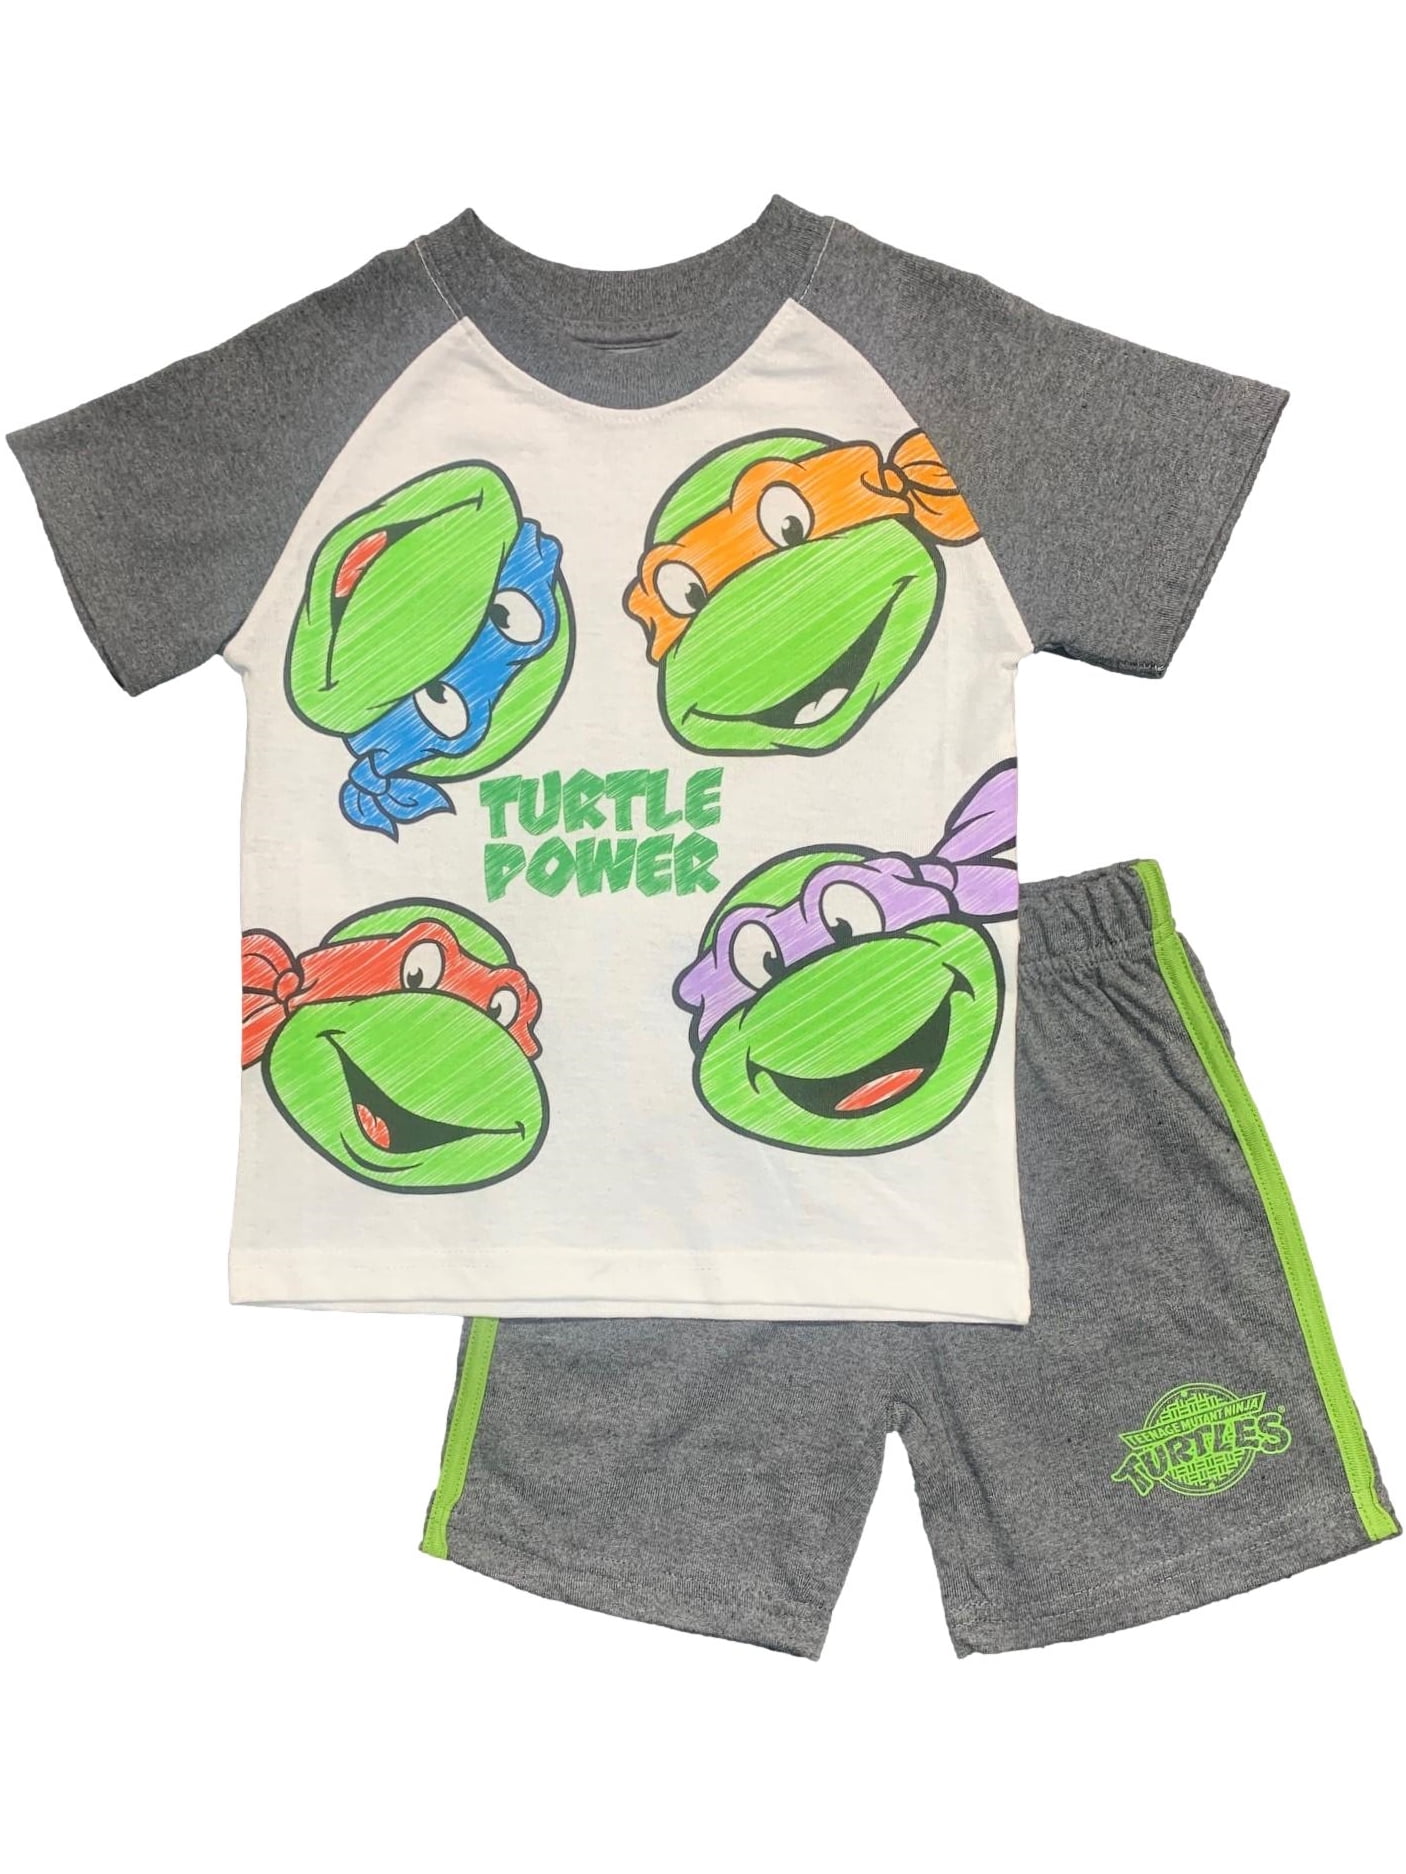 Teenage Mutant Ninja Turtles Big Boys T-Shirt Tank Top and Shorts 3 Piece Outfit Set Black / Green 18-20